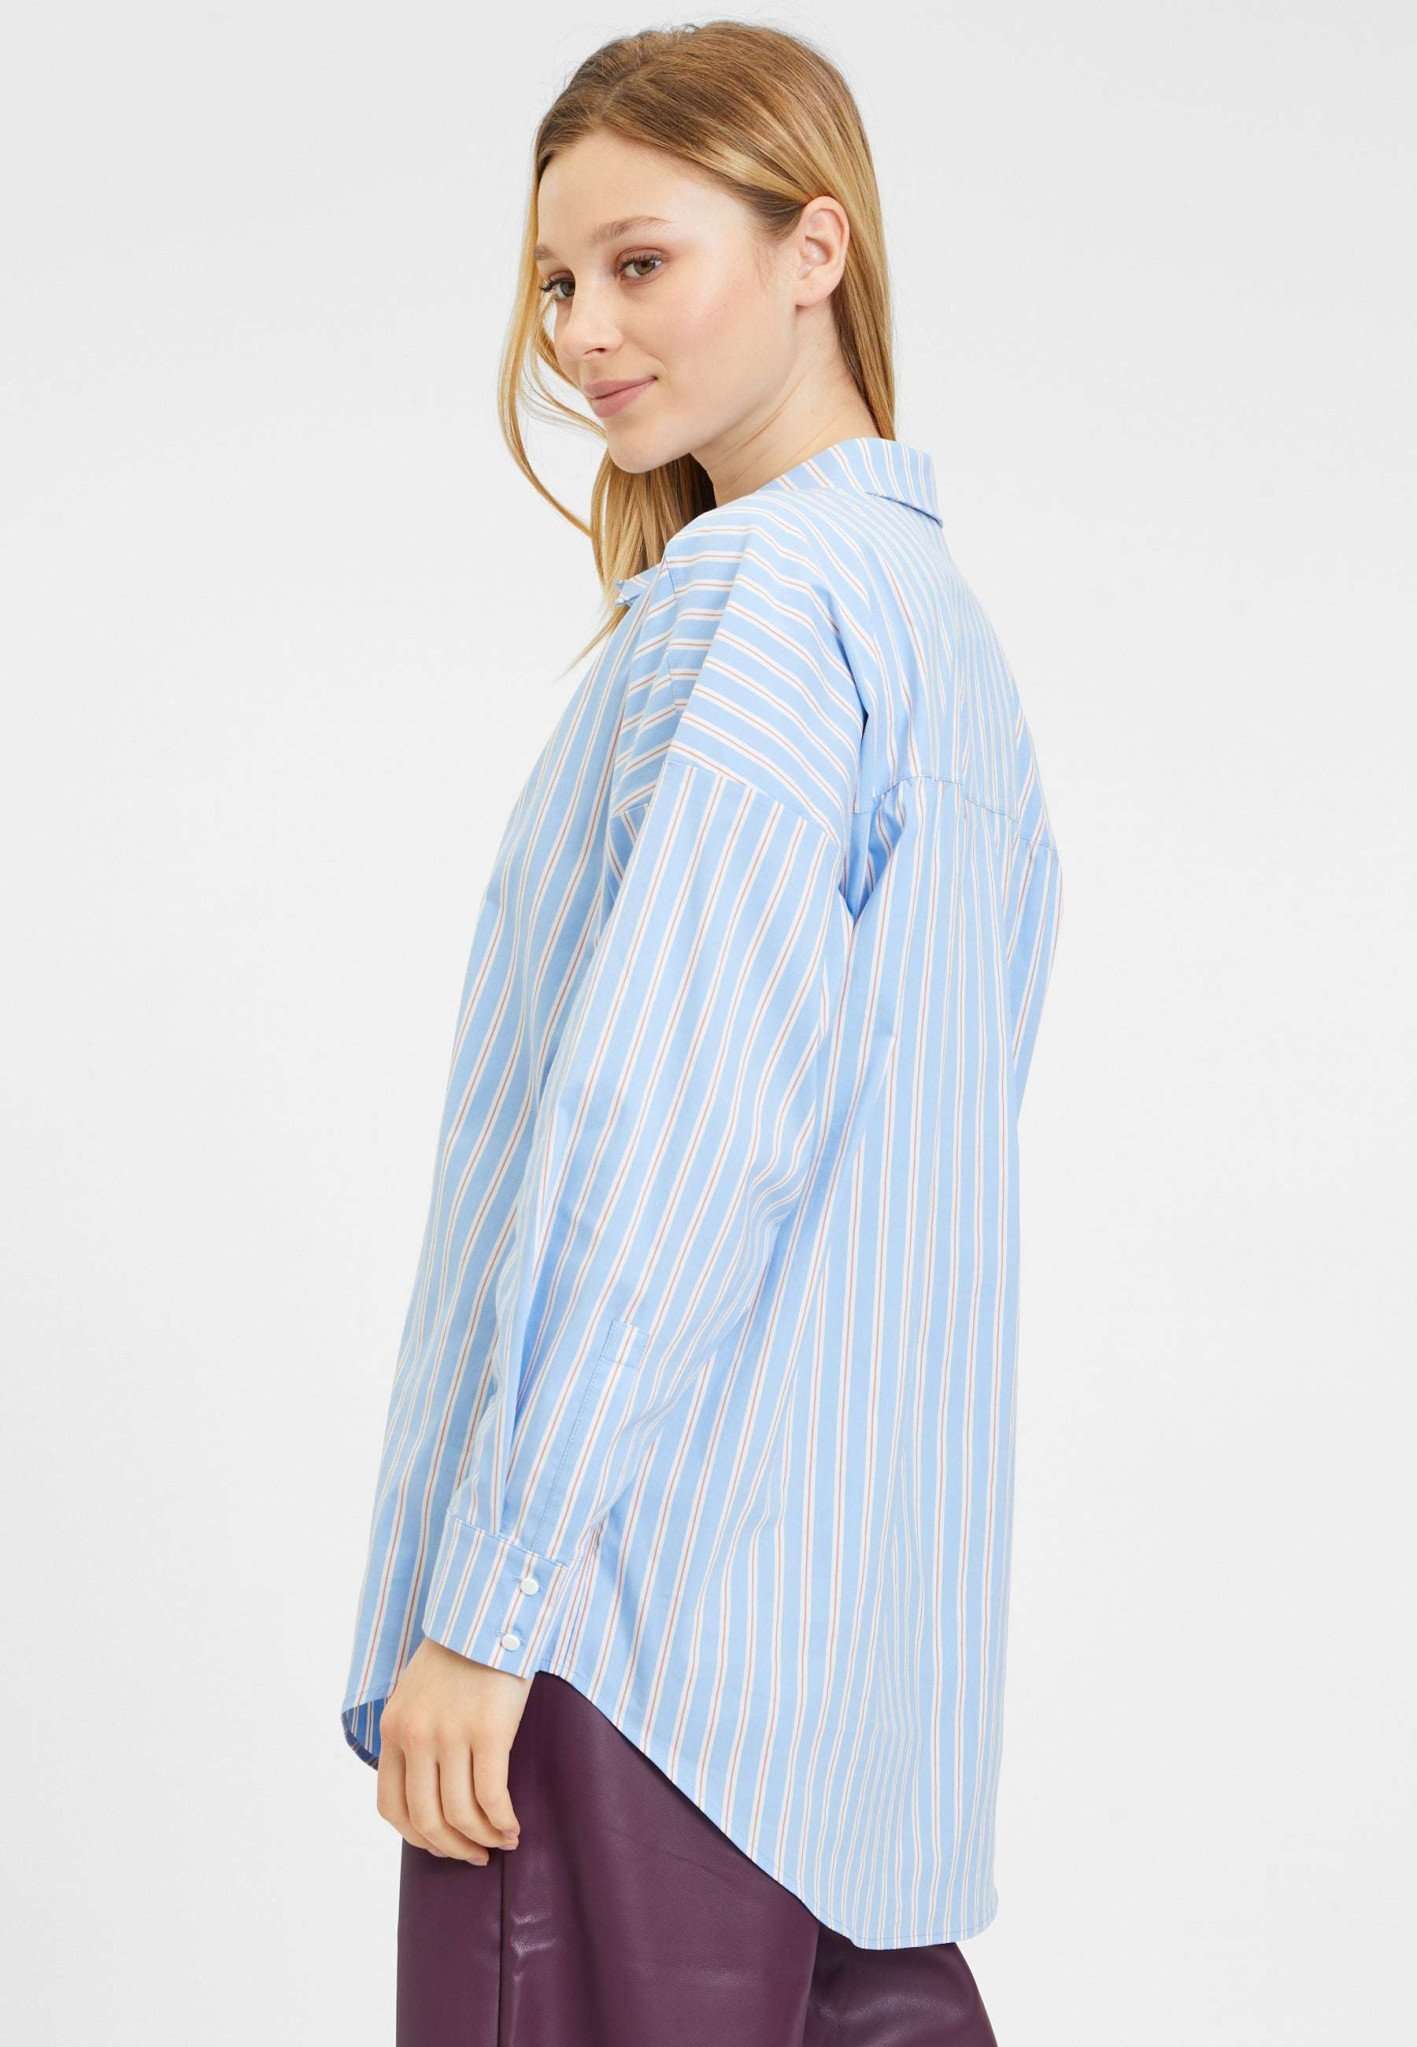 Baystep Striped Shirt in Della Robbia Blue Striped Hemden Tamaris   